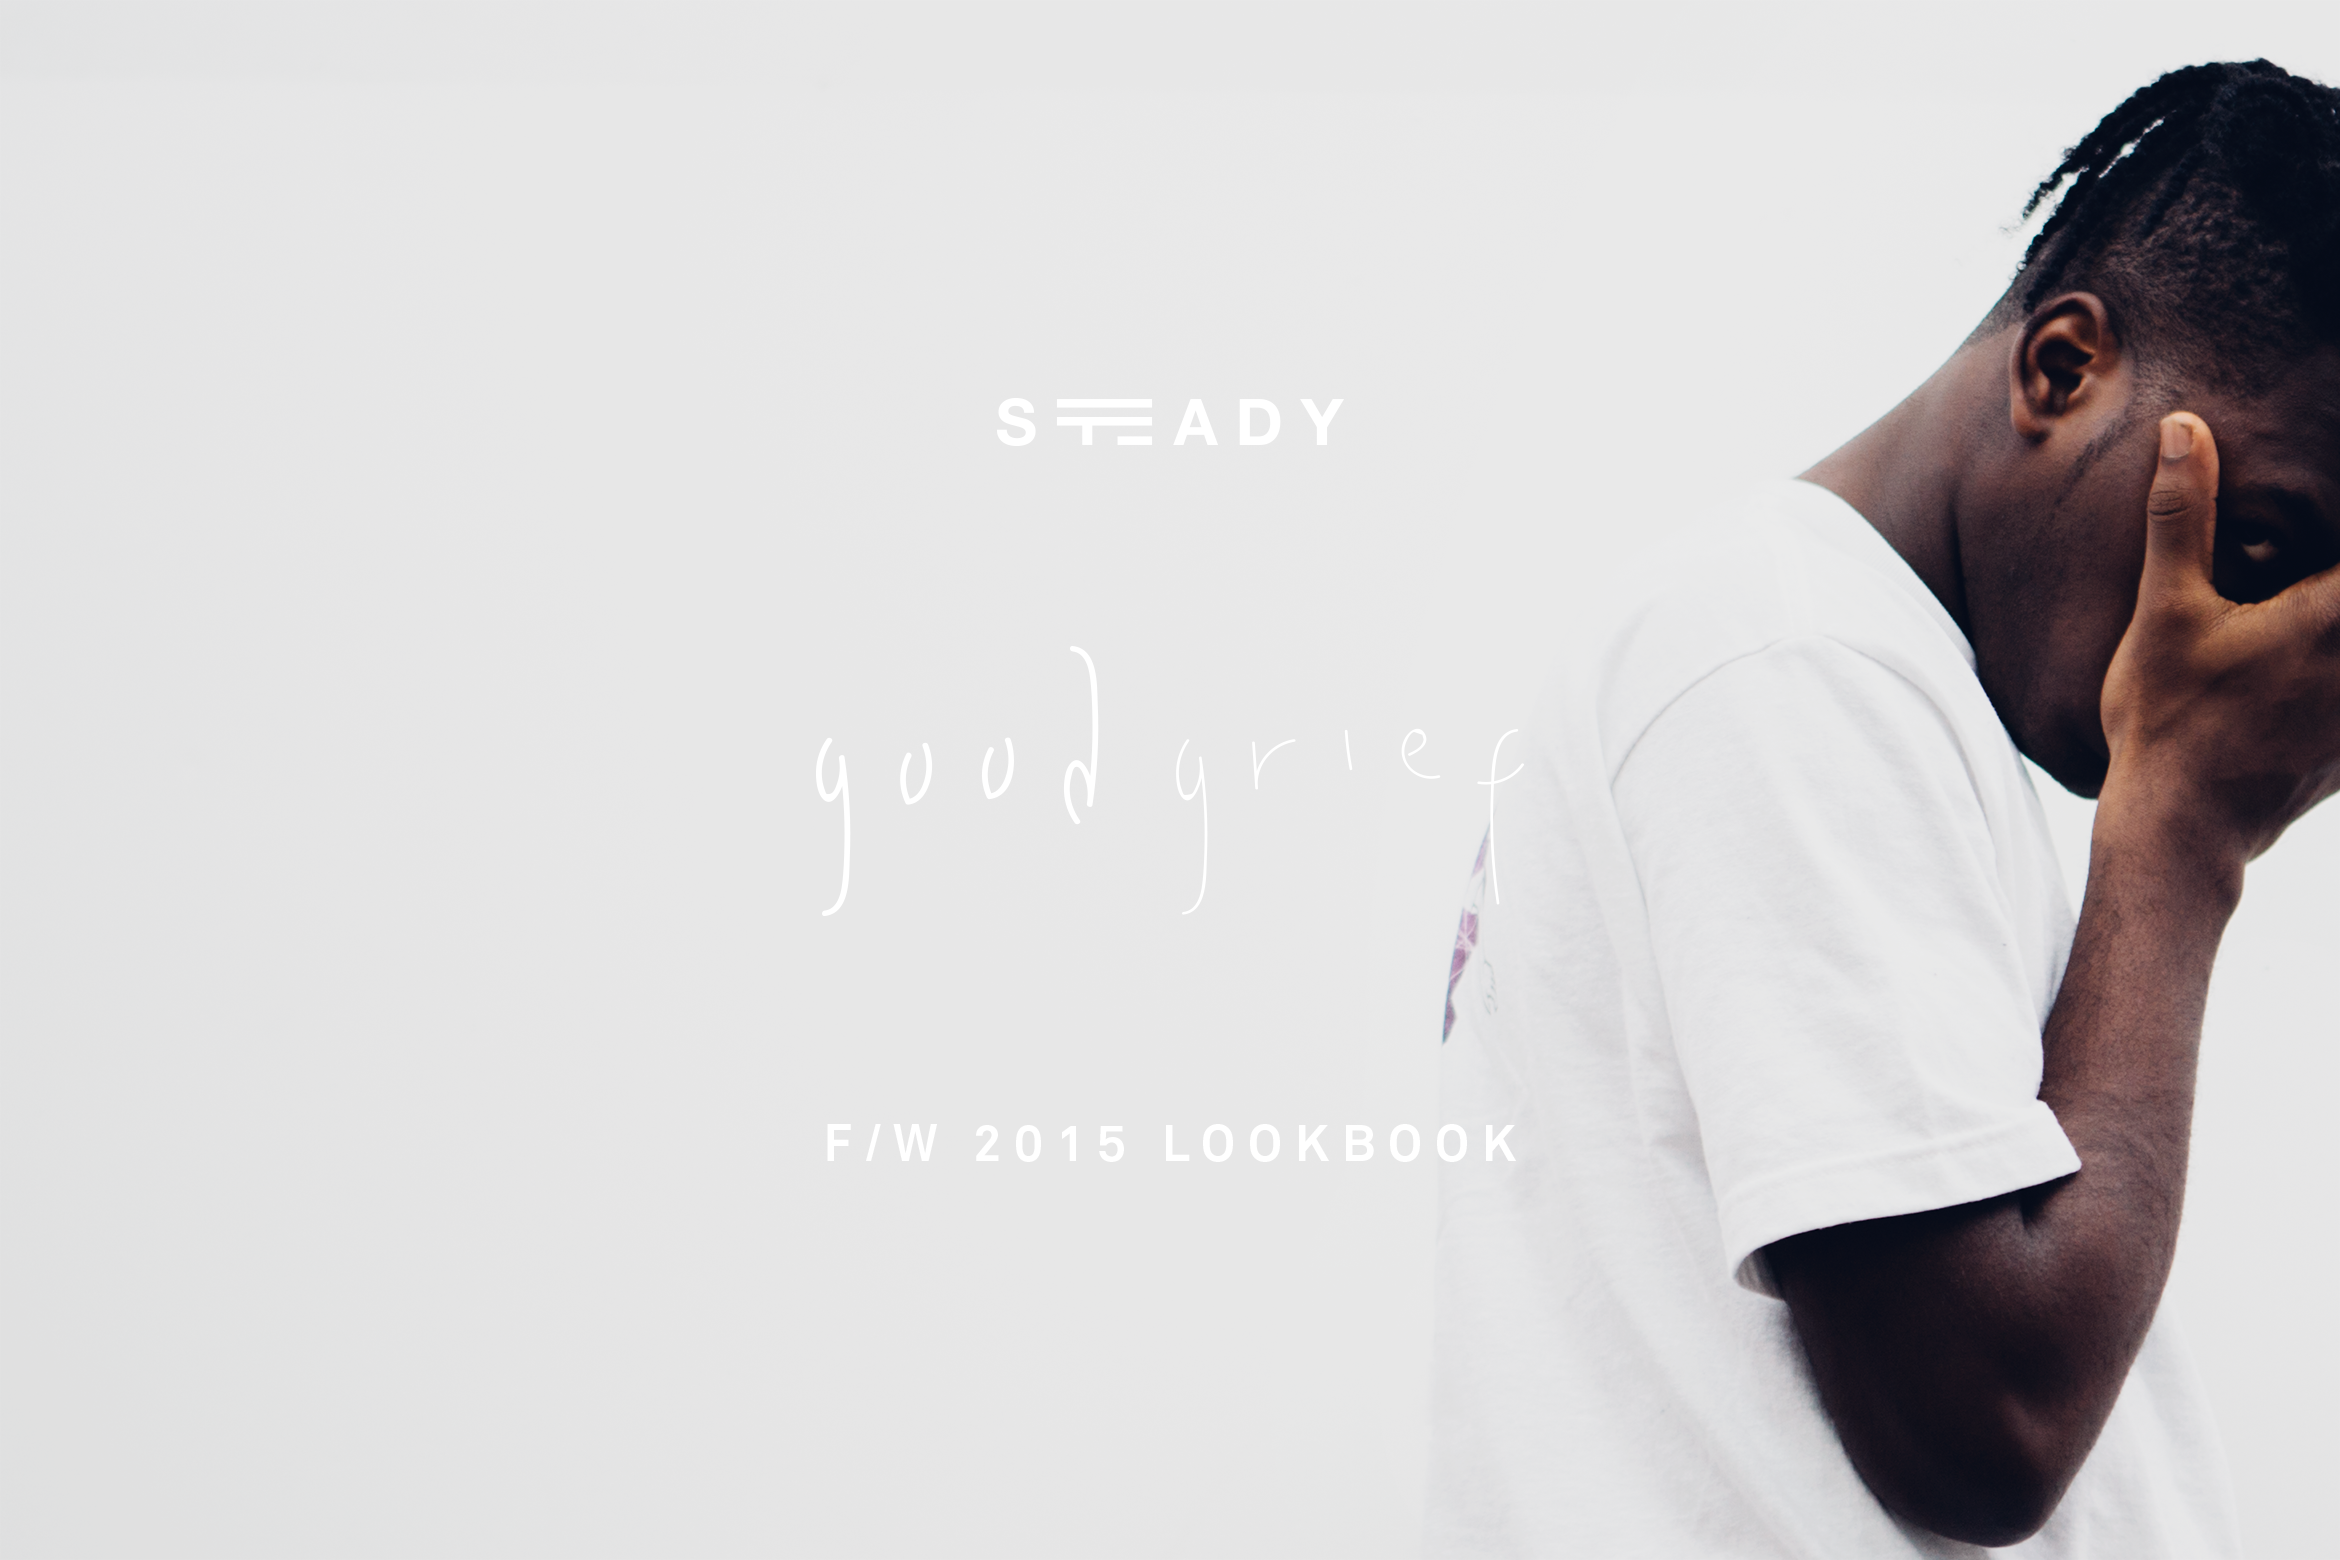 STEADY ‘GOOD GRIEF’ F/W 2015 LOOKBOOK